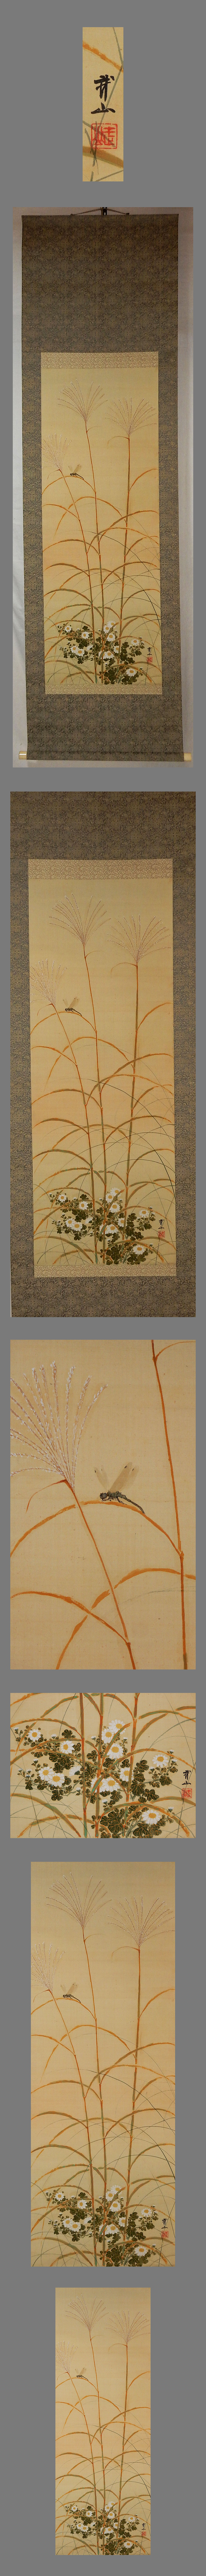 真作□木村武山□芒に蜻蛉菊図□日本画の近代化に尽力□肉筆□掛軸